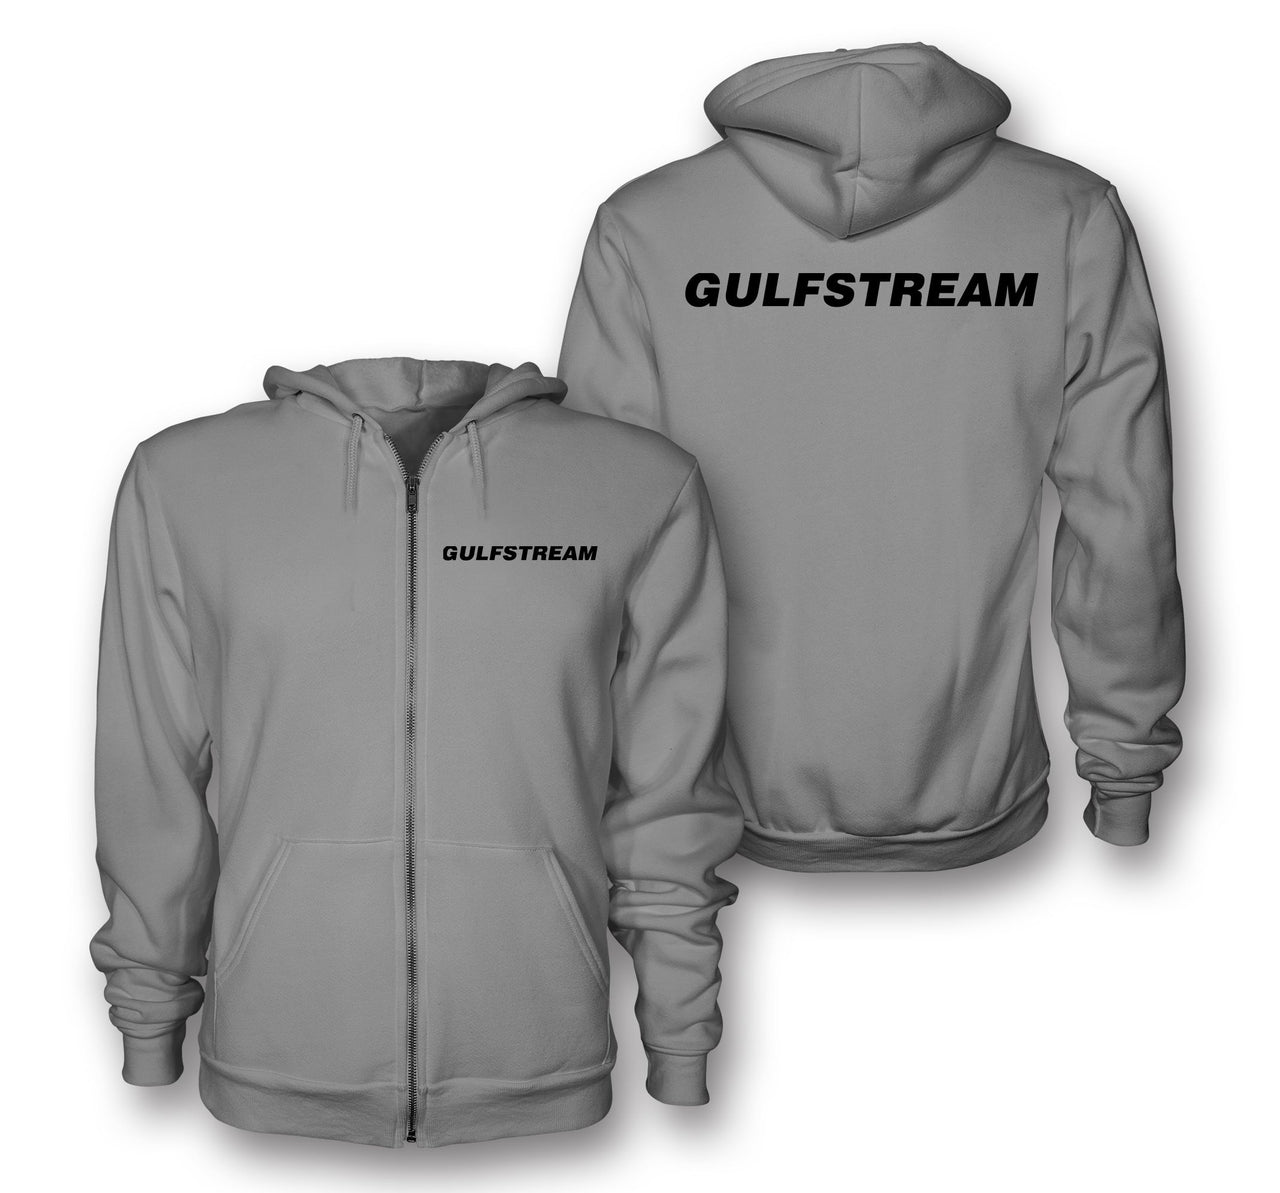 Gulfstream & Text Designed Zipped Hoodies